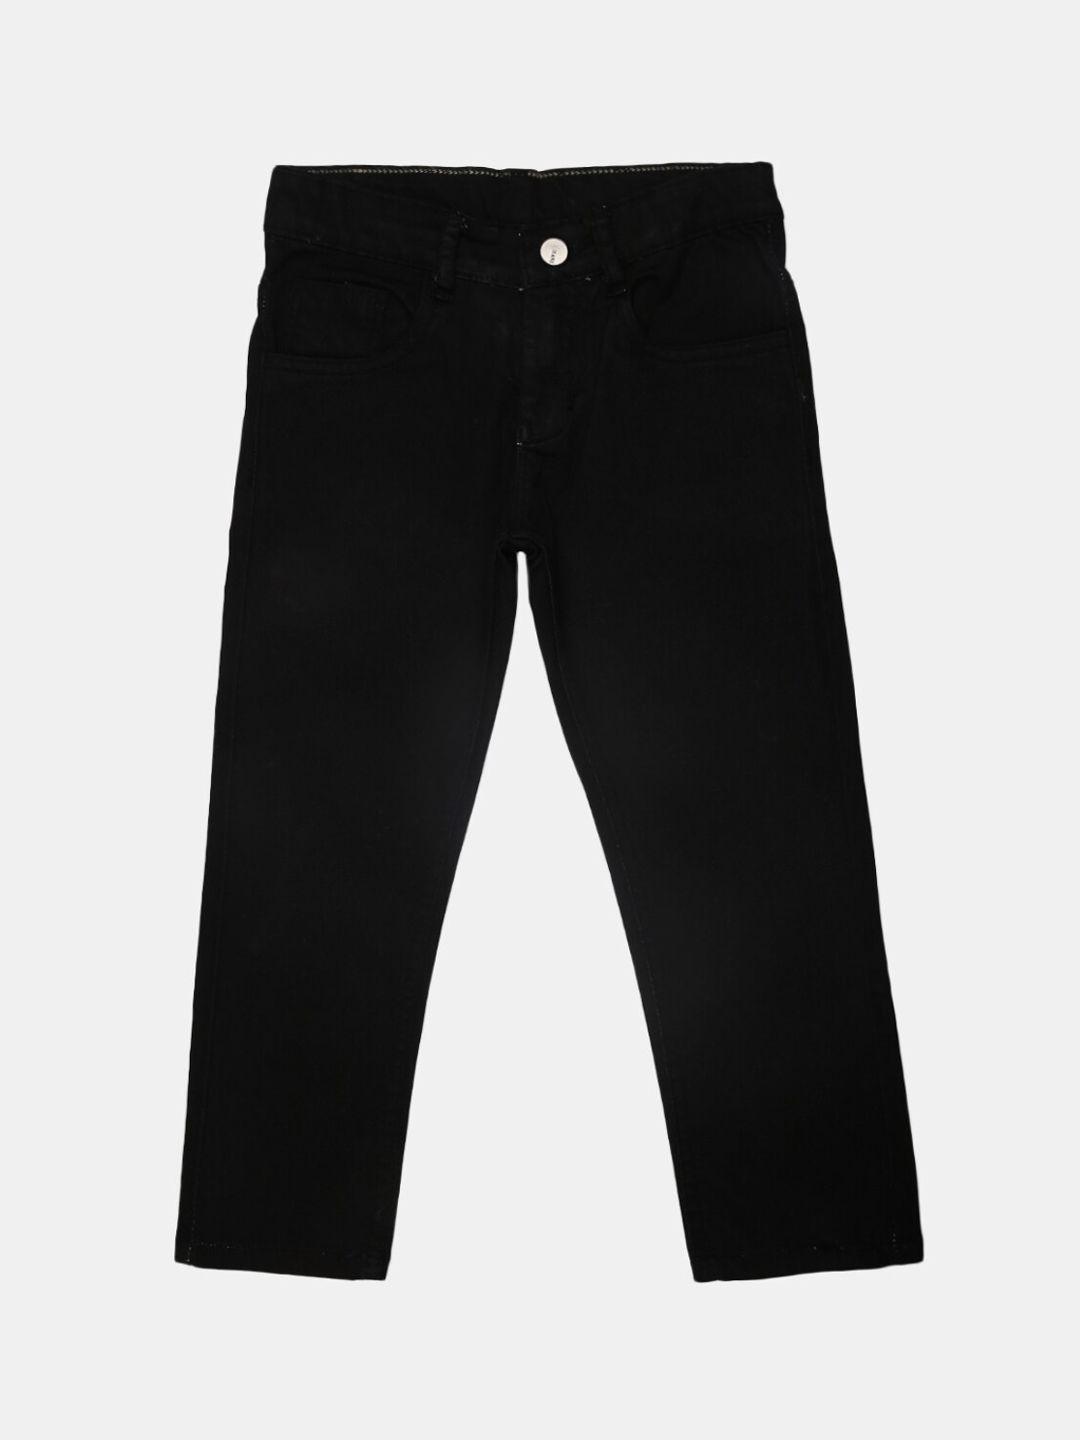 v-mart boys black classic chinos trousers